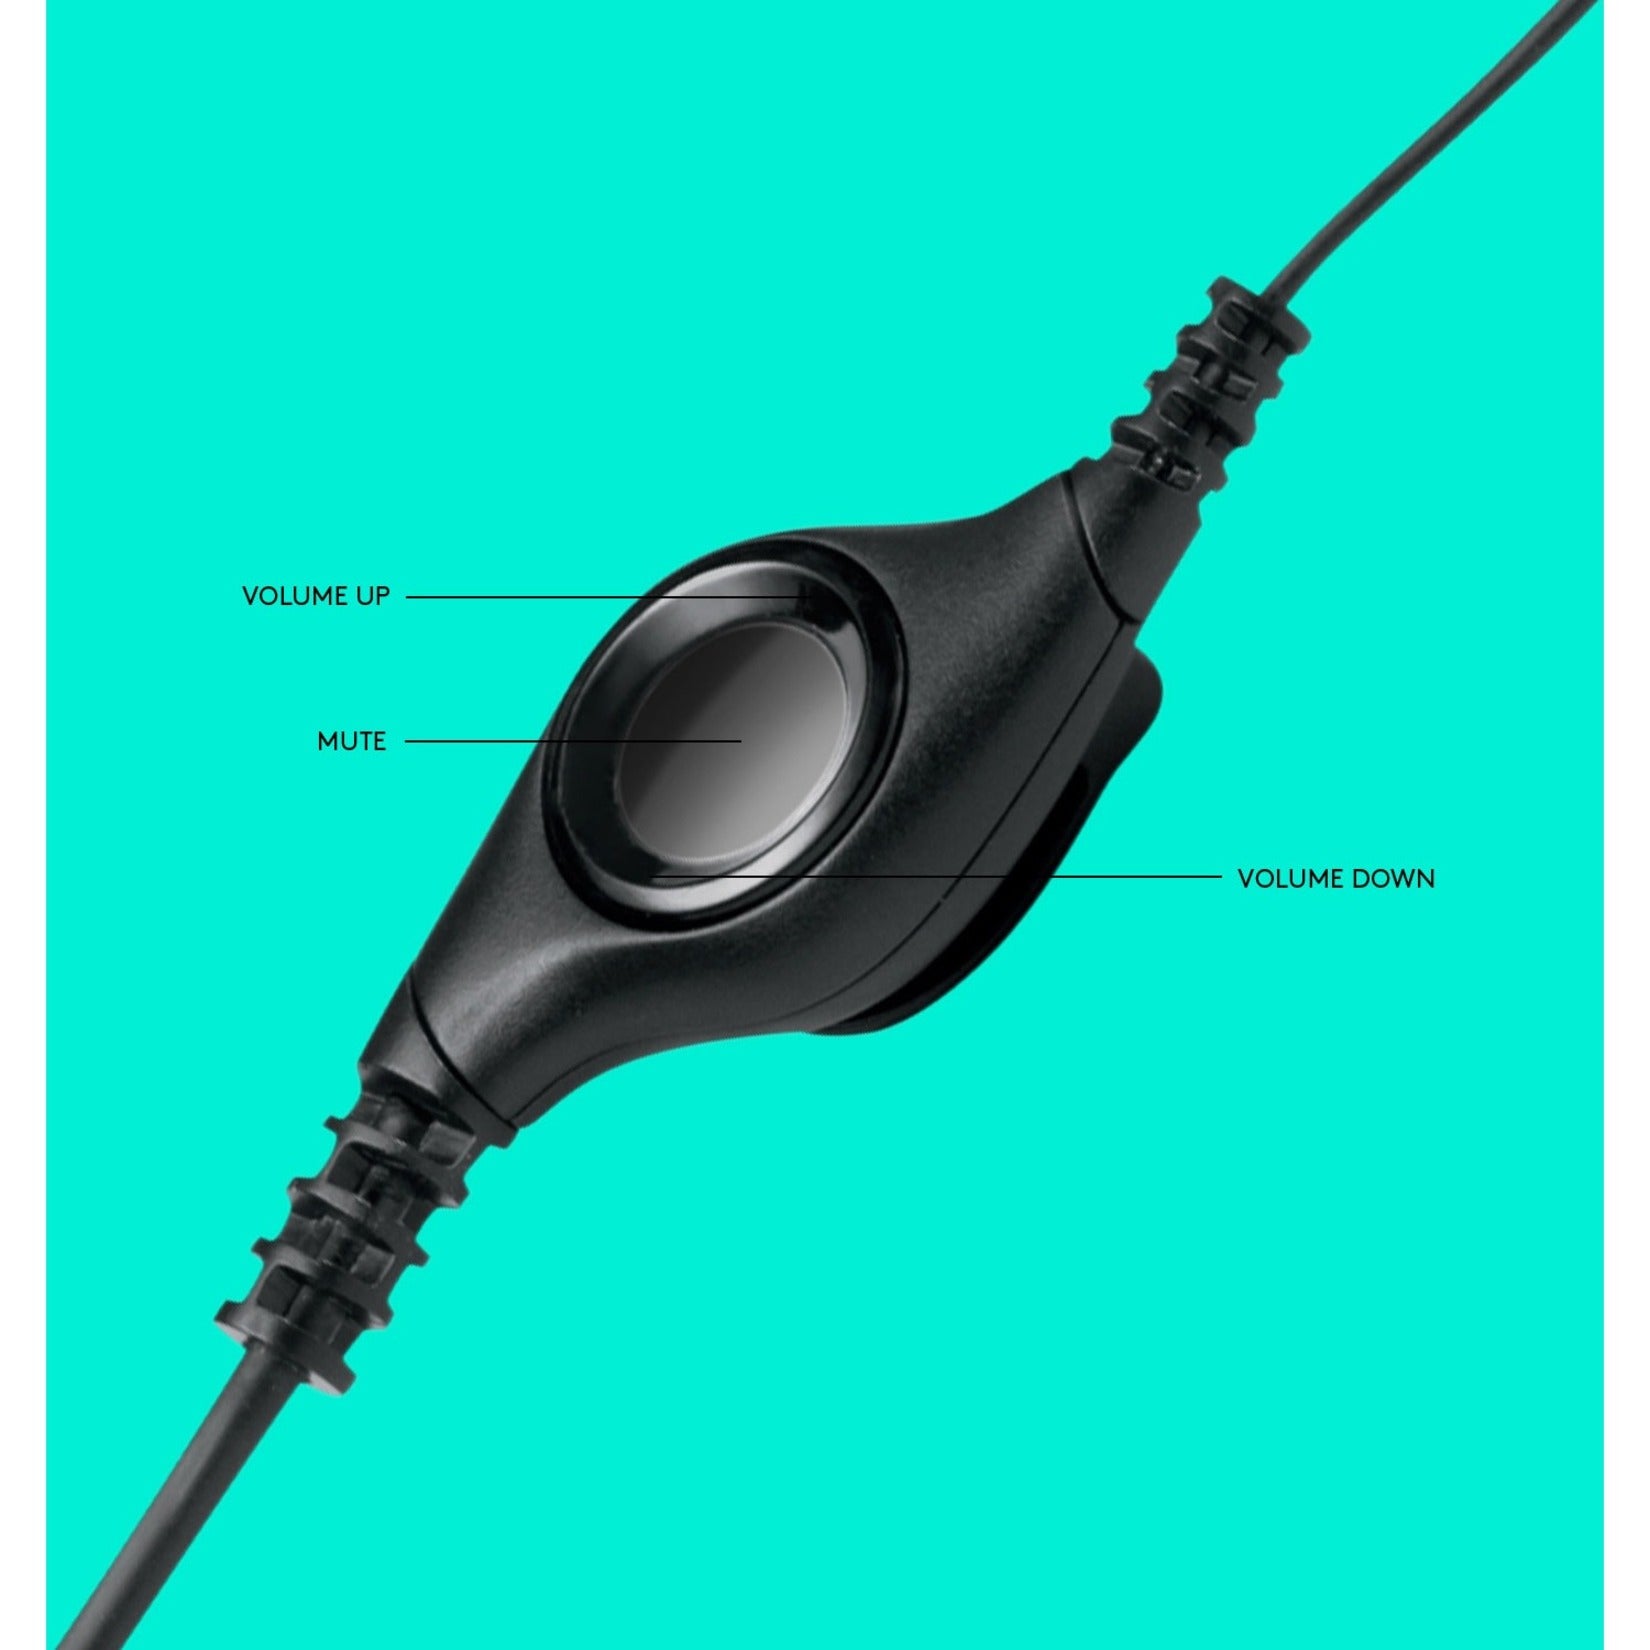 Logitech 981-000014 Padded H390 USB Headset, Volume/Mute Controls, Black